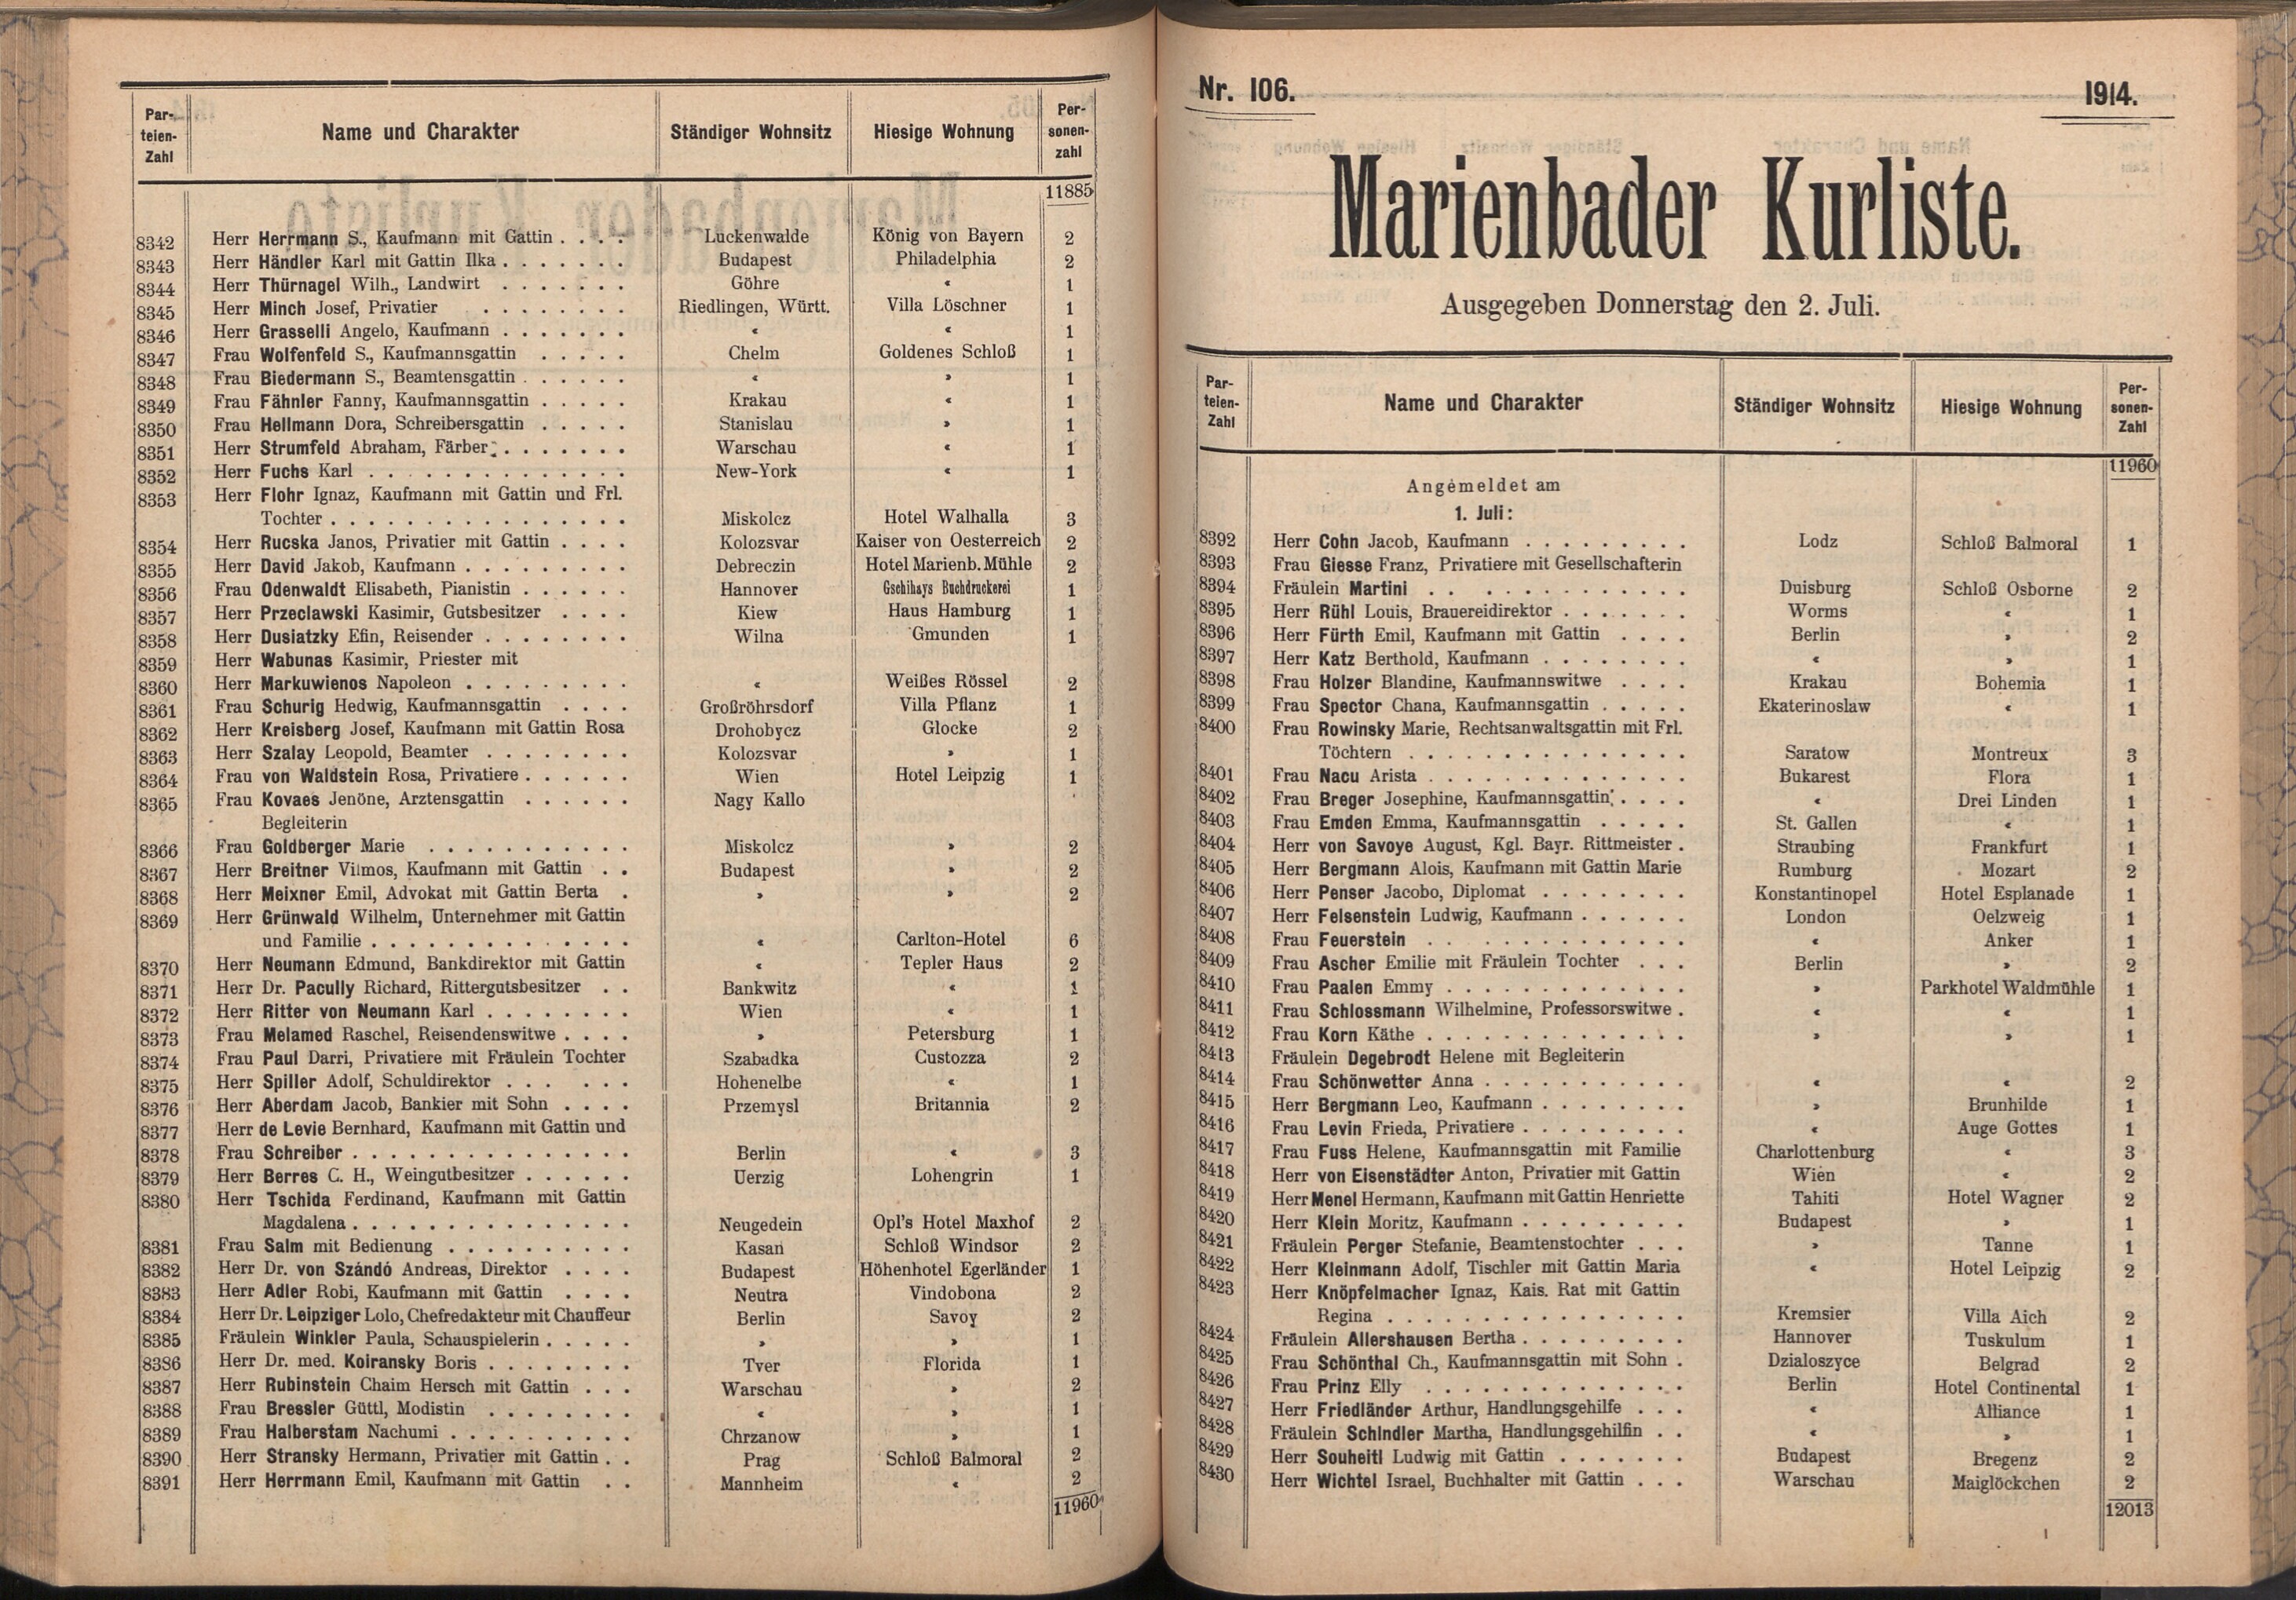 198. soap-ch_knihovna_marienbader-kurliste-1914_1980